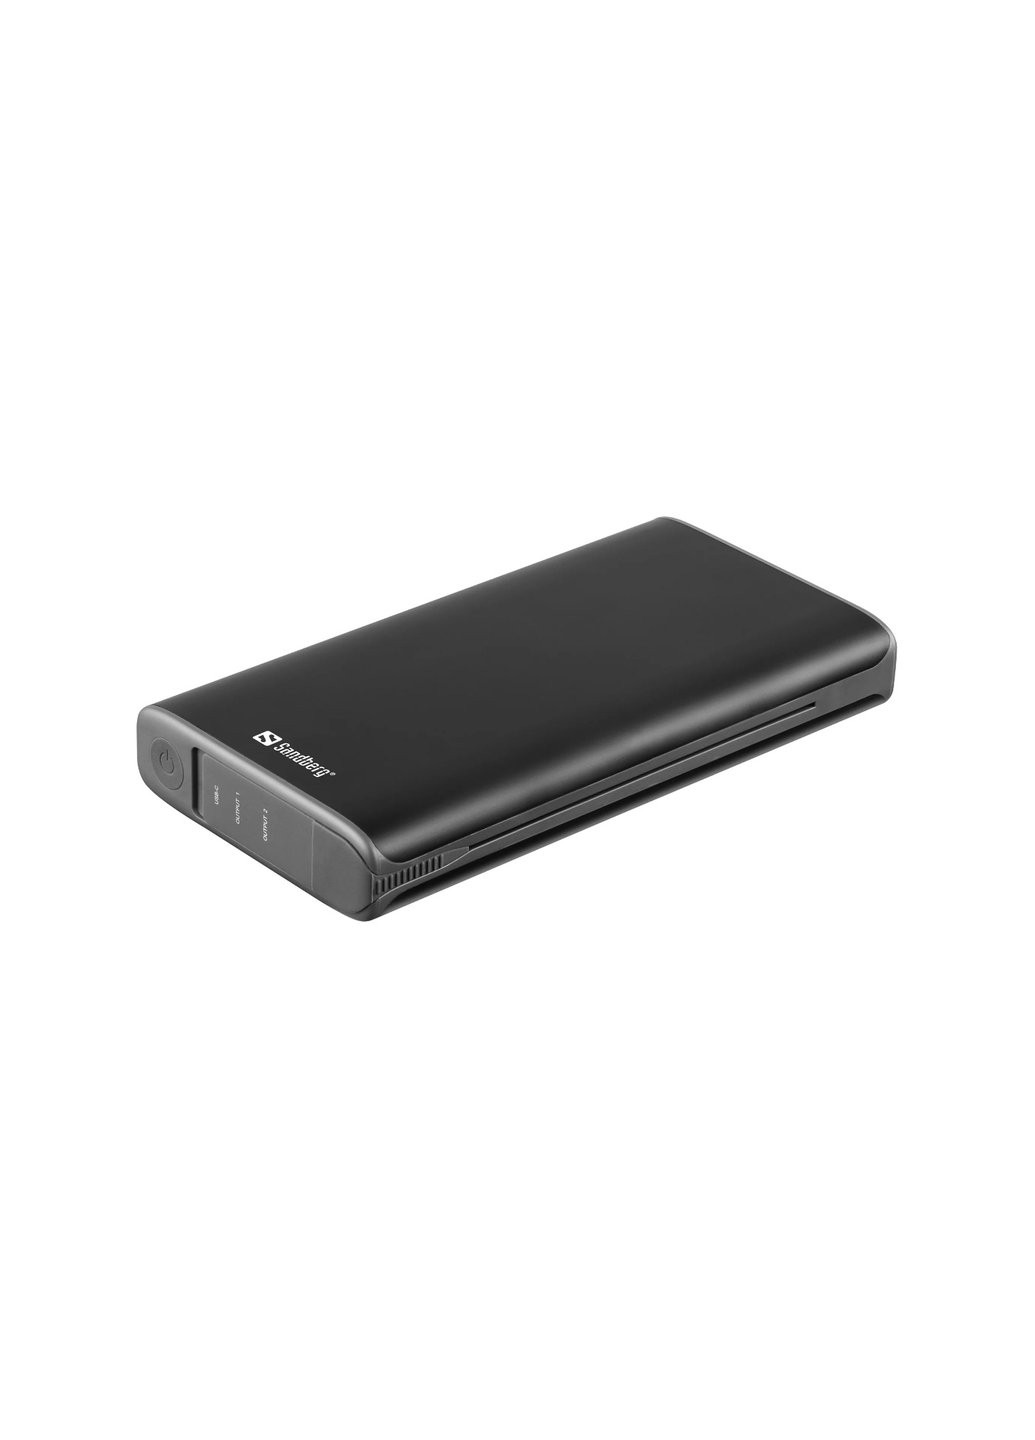 Батарея універсальна 25000mAh, Solar 4-Panel/8W, USB-C input/output(18W max), USB-A*2/3A(Max) (420-56) Sandberg (257257331)